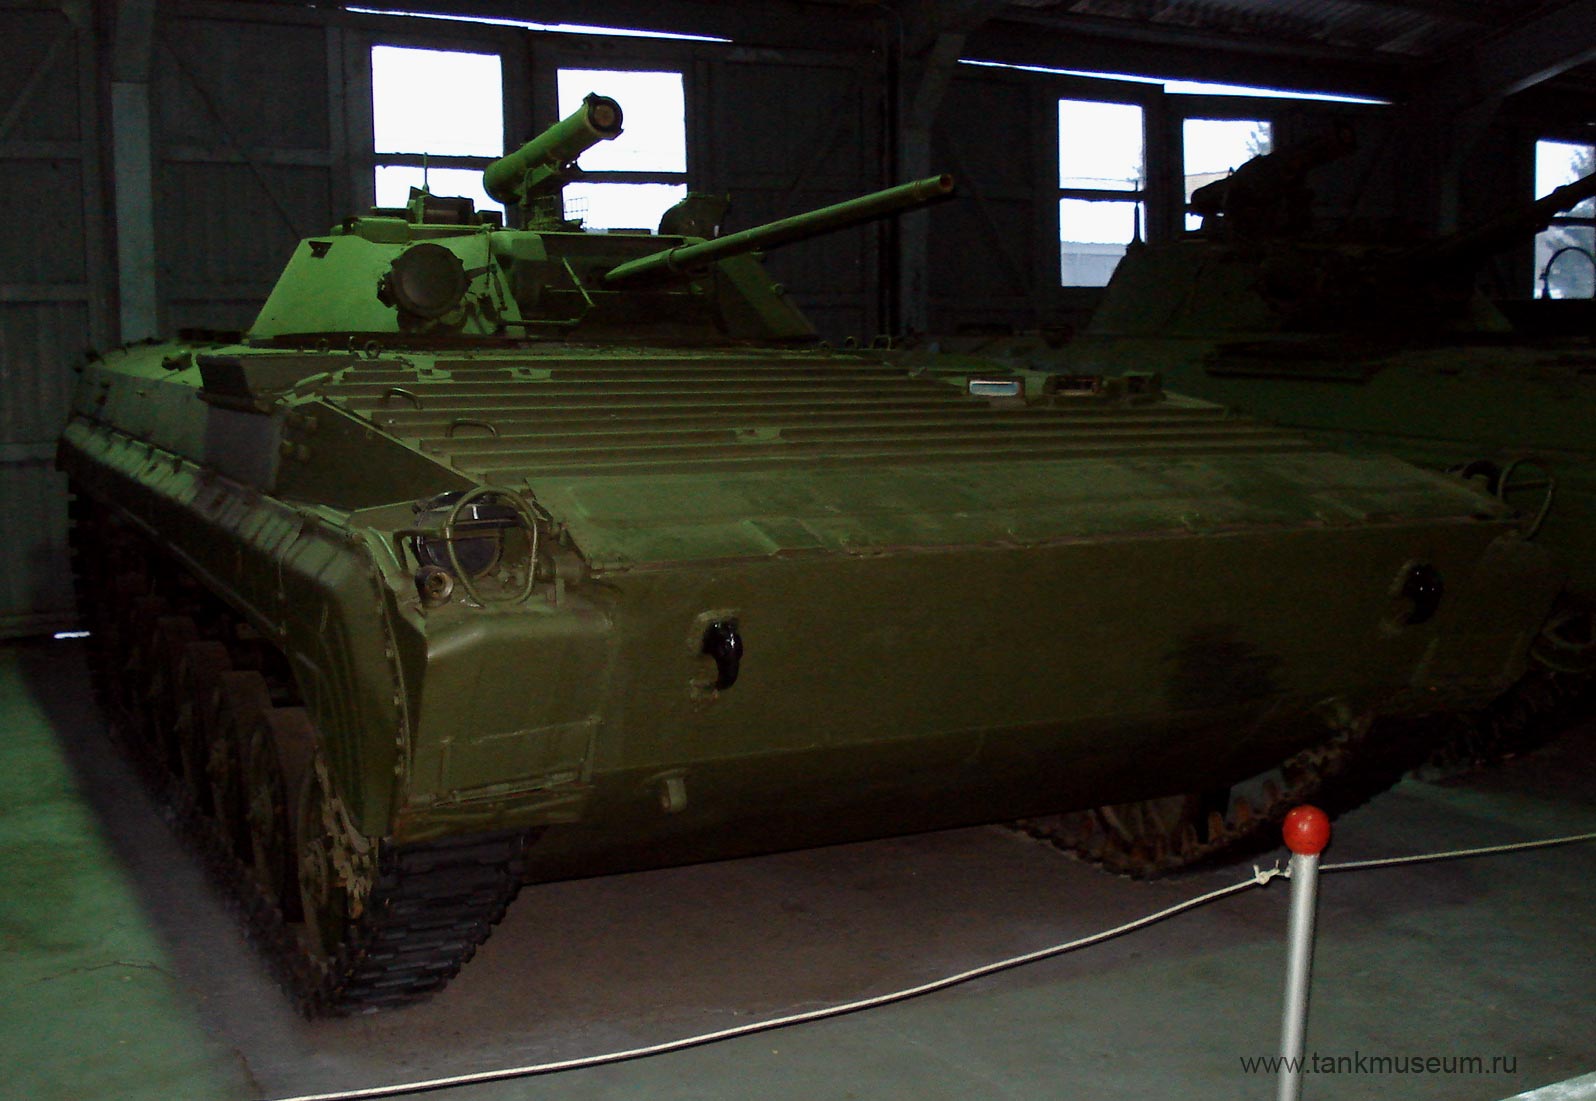 Infantry Fighting Vehicle, Object 768, Kubinka tank museum